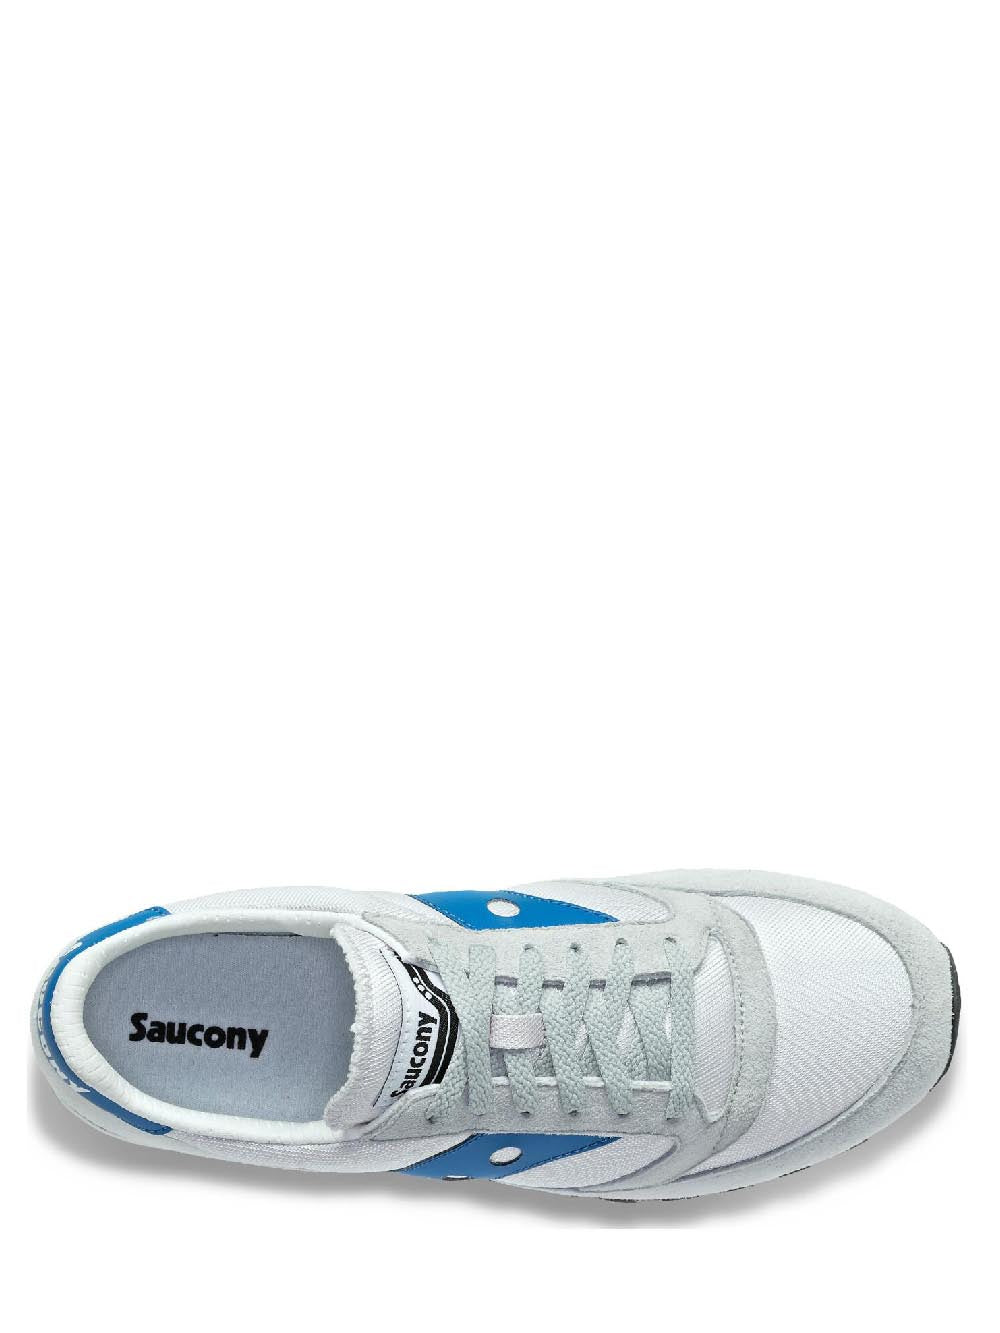 Saucony Sneakers Uomo Jazz 81 S70539 Grigio/bluette